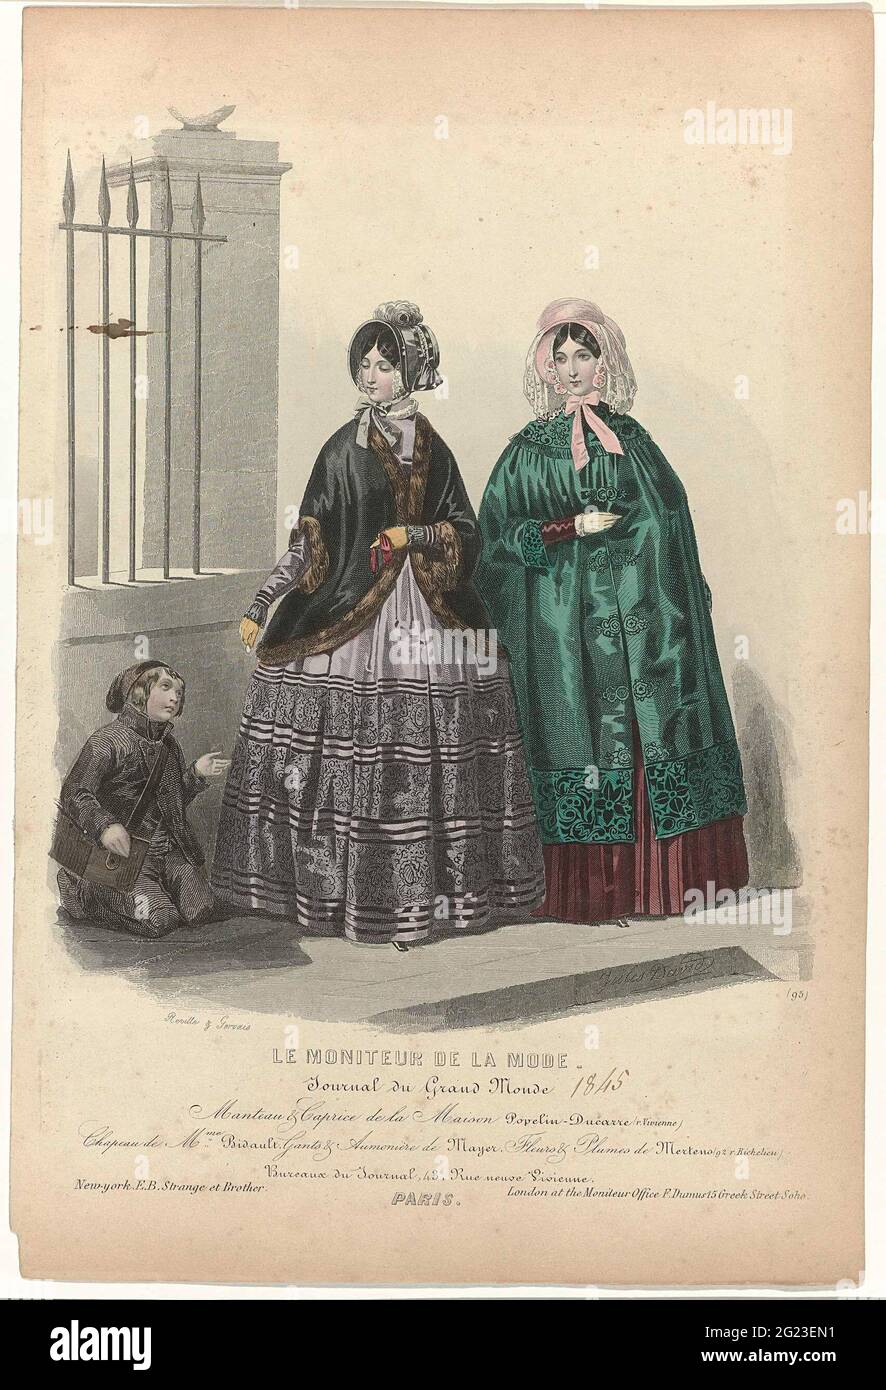 Le Moniteur de la Mode, 1845, no. 95: Manteau & Caprice de la Maison (...).  Two women at a fence, one of whom one gives a coin to a beggar. According to